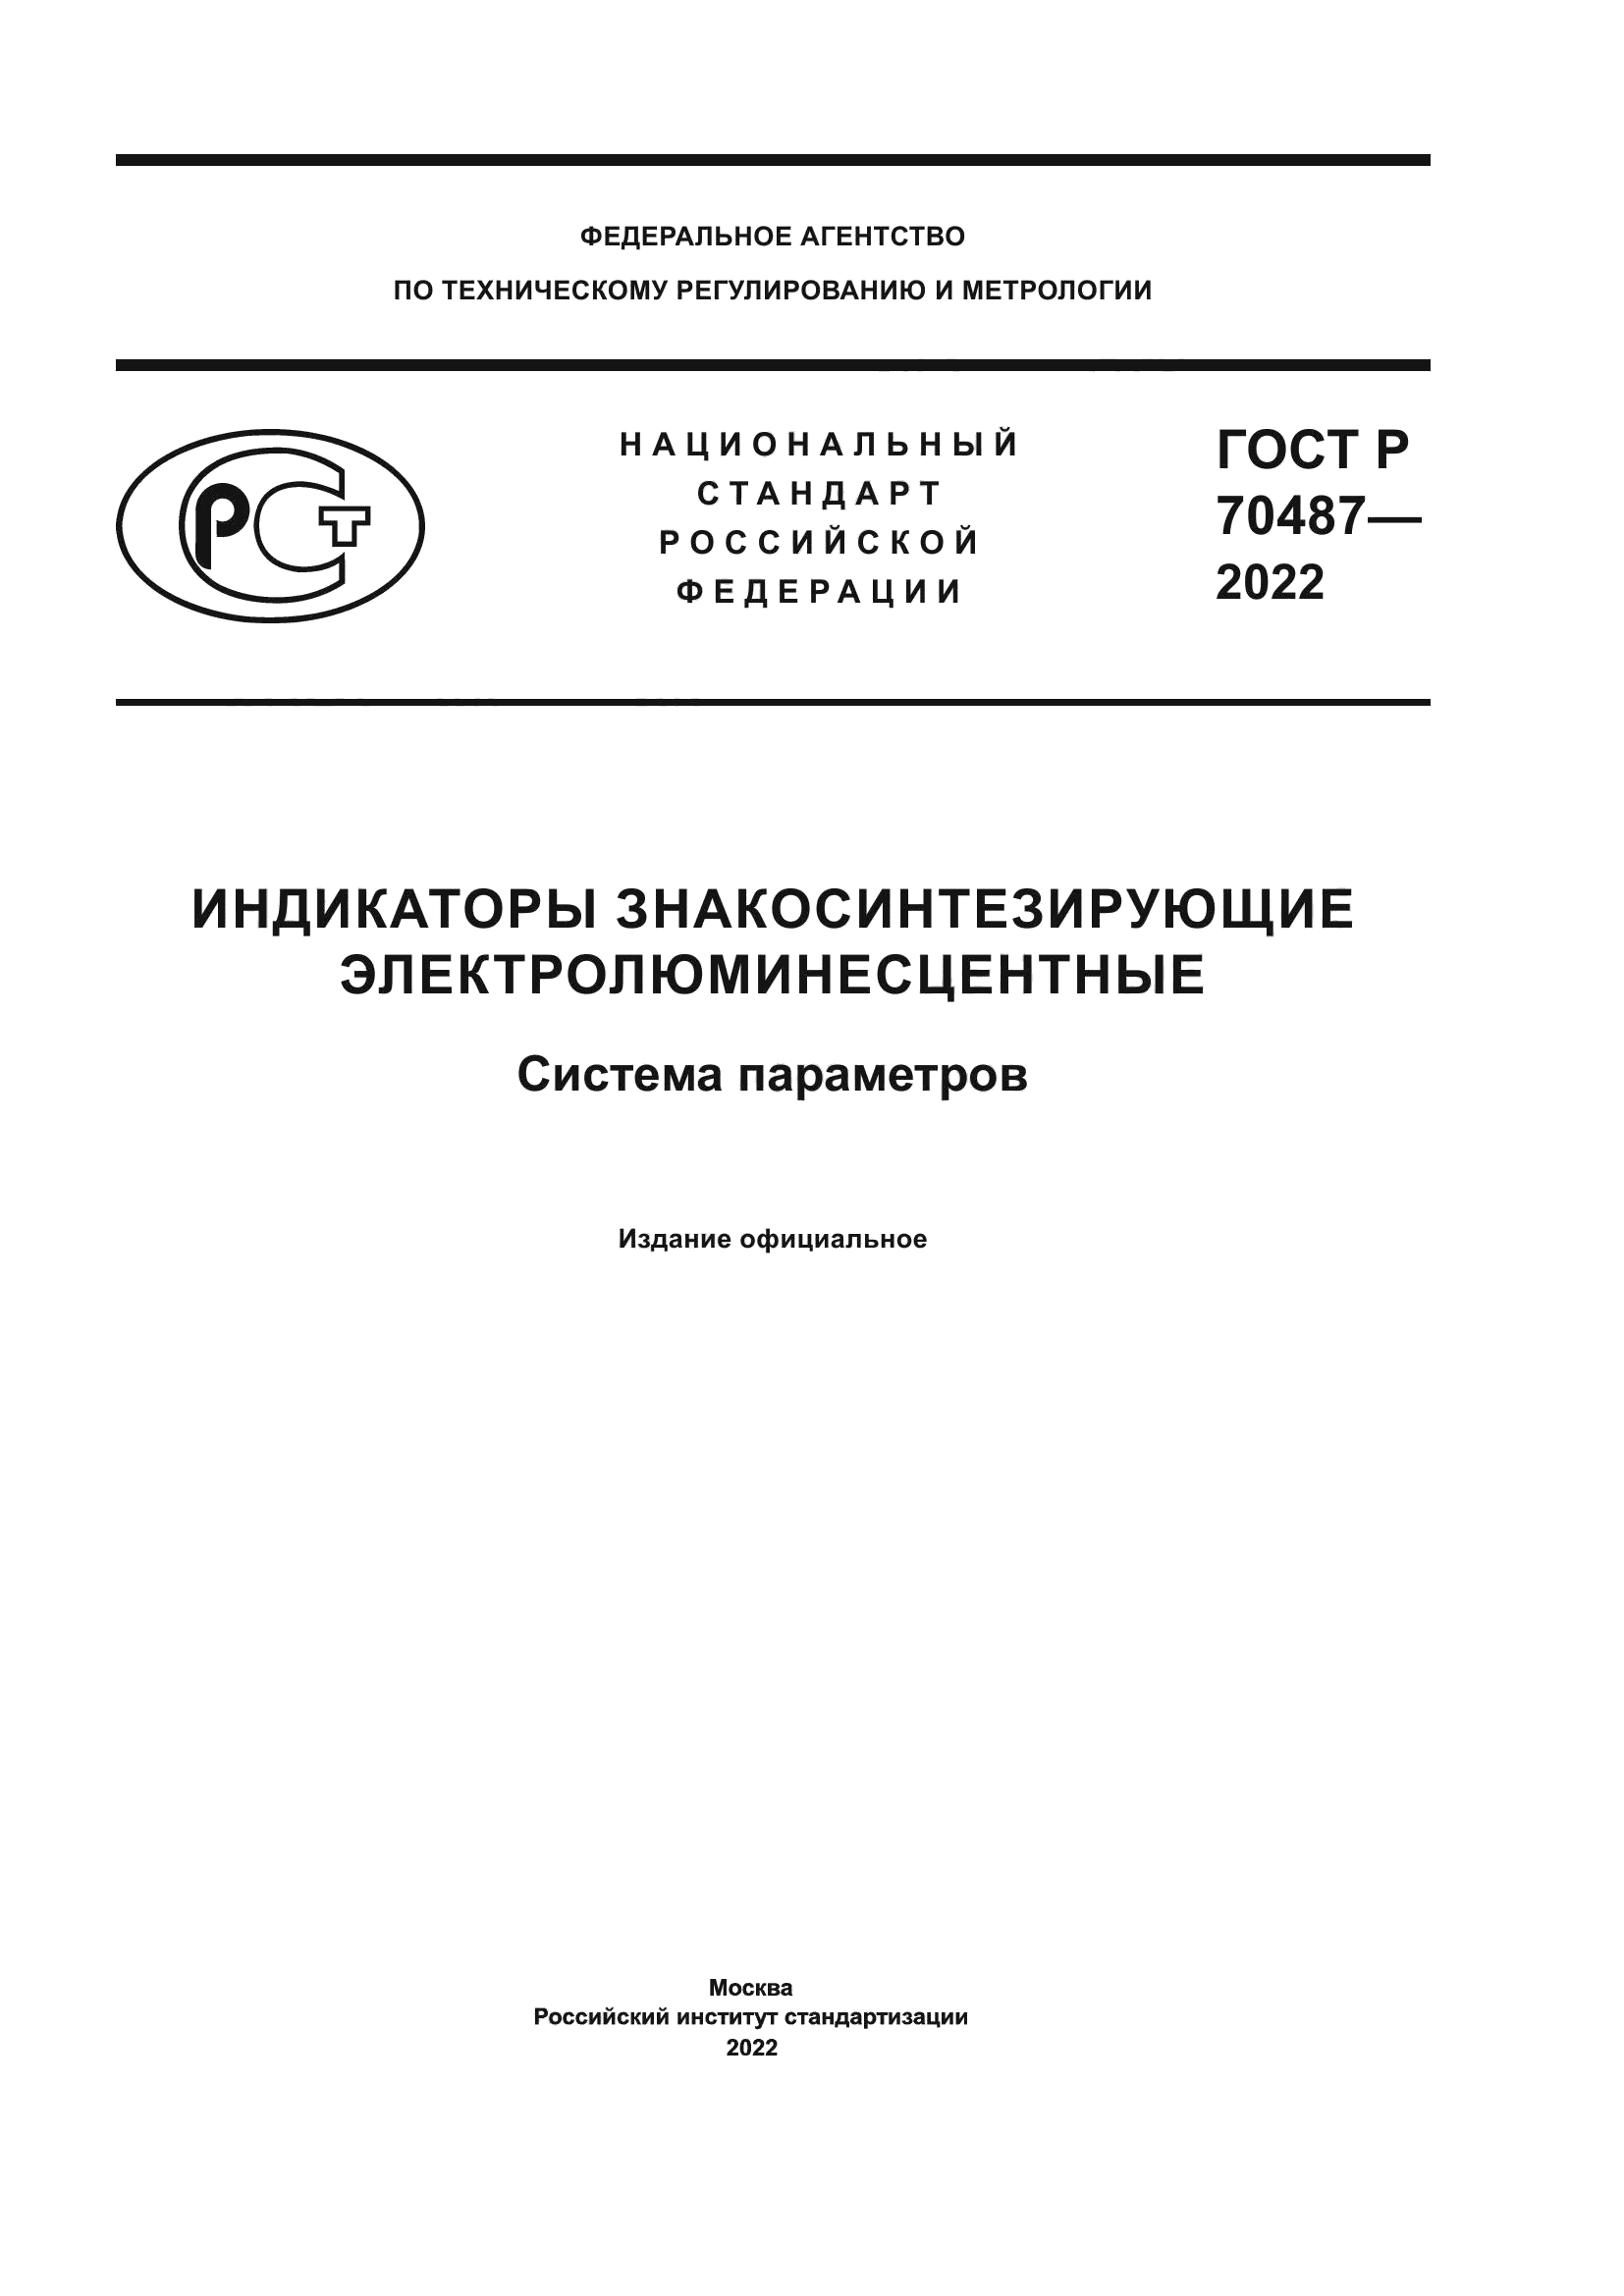 ГОСТ Р 70487-2022